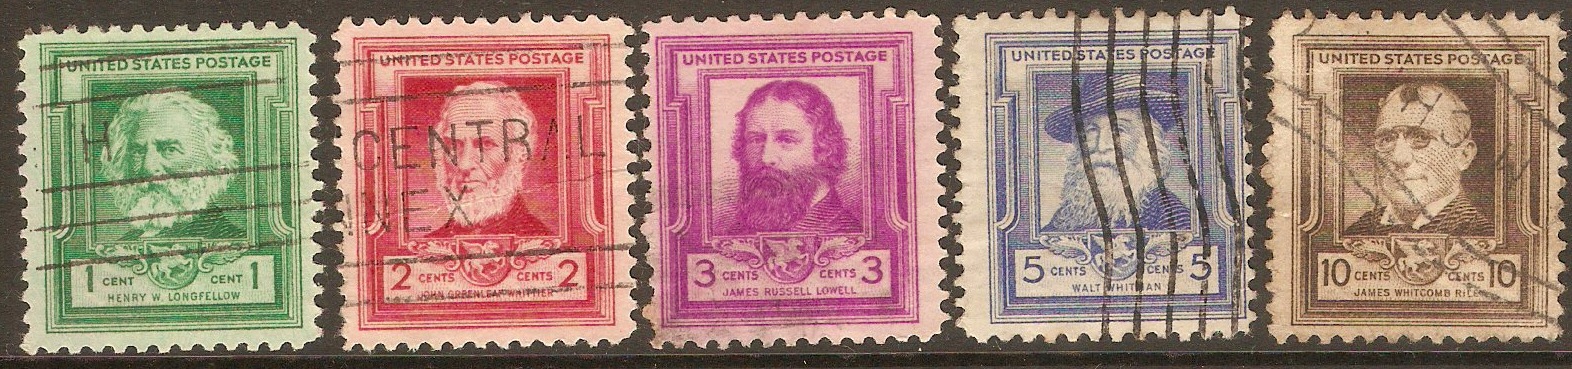 United States 1940 Poets set. SG861-SG865.